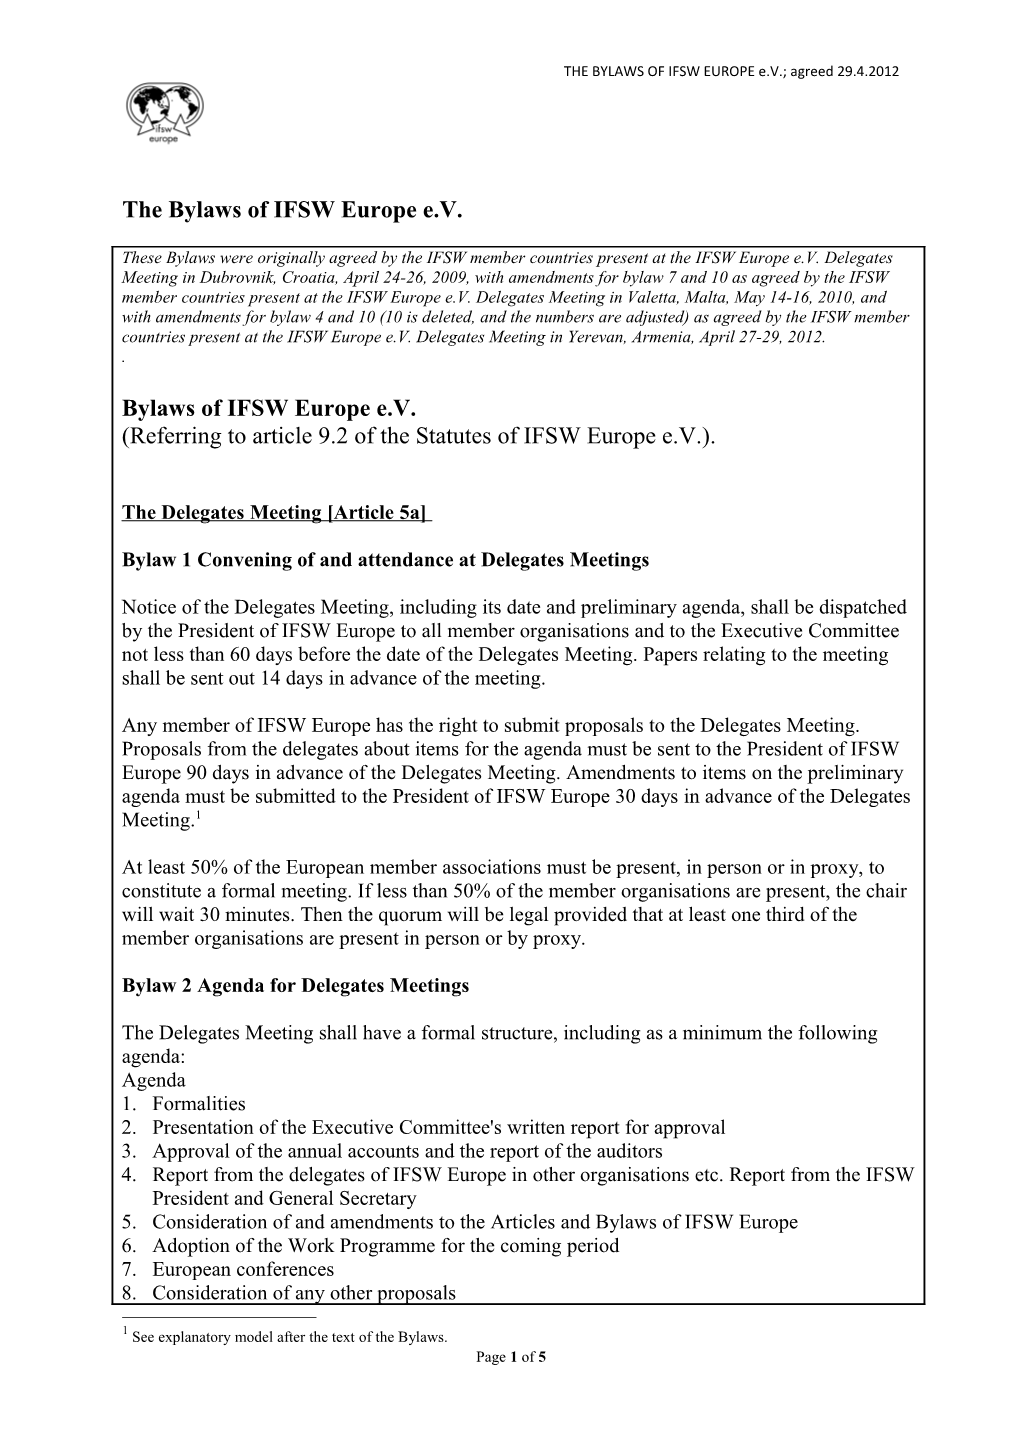 THE BYLAWS of IFSW EUROPE E.V.; Agreed 29.4.2012